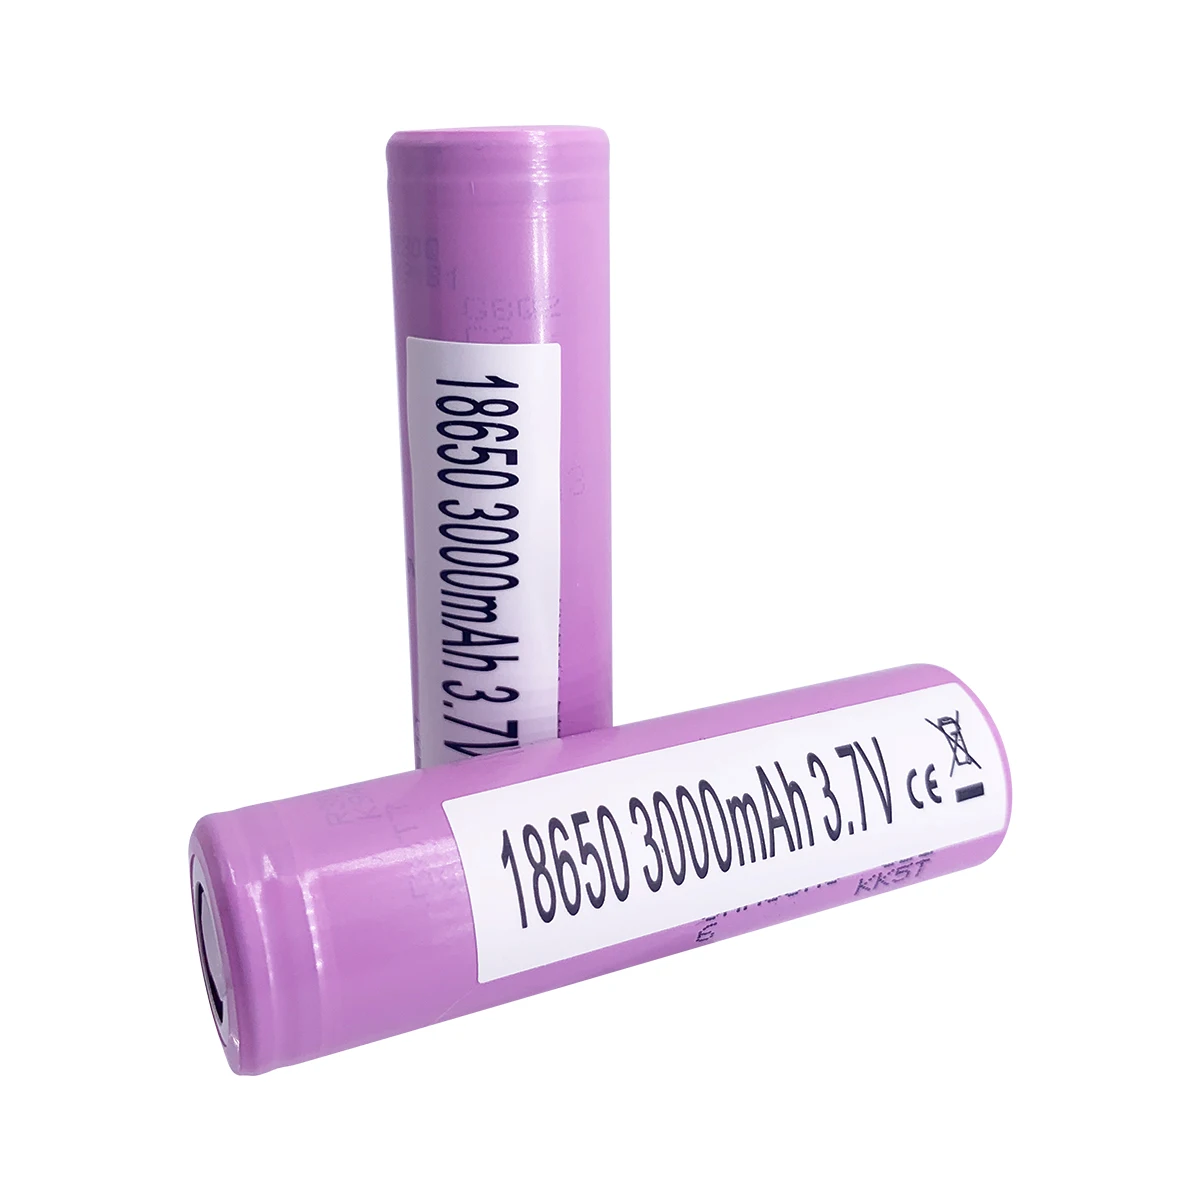 Hot selling 18650 battery 3.7v 30Q 3000 mah lithium ion battery for e-cigarette